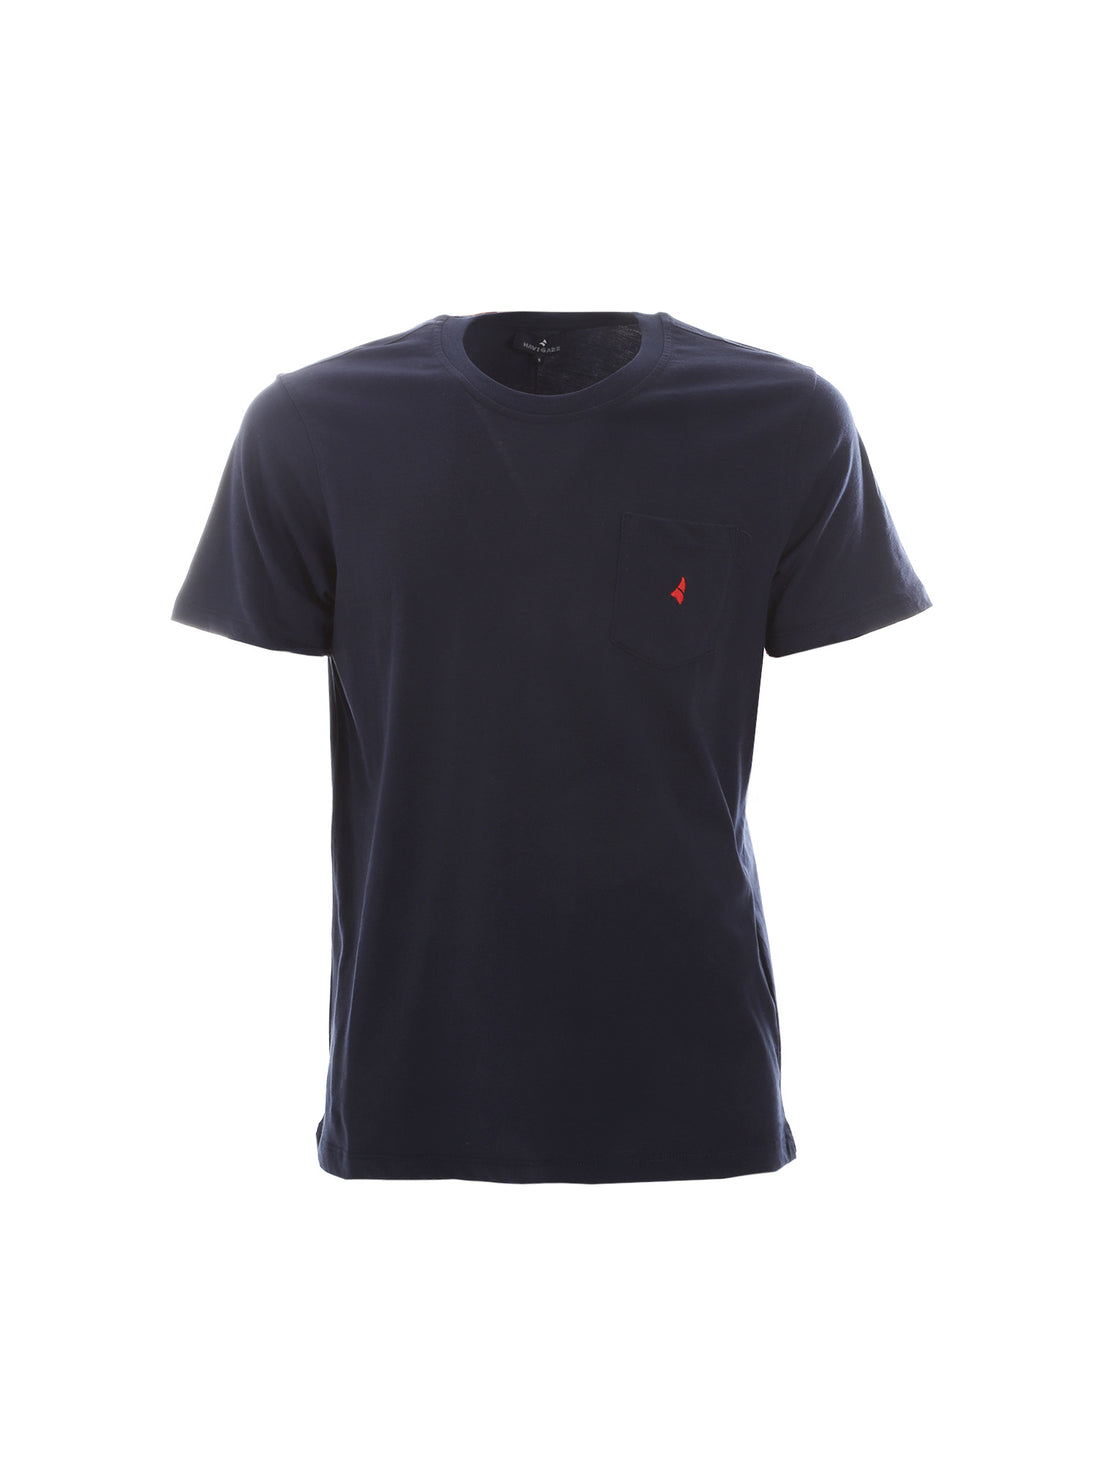 T-shirt Blu Scuro Navigare